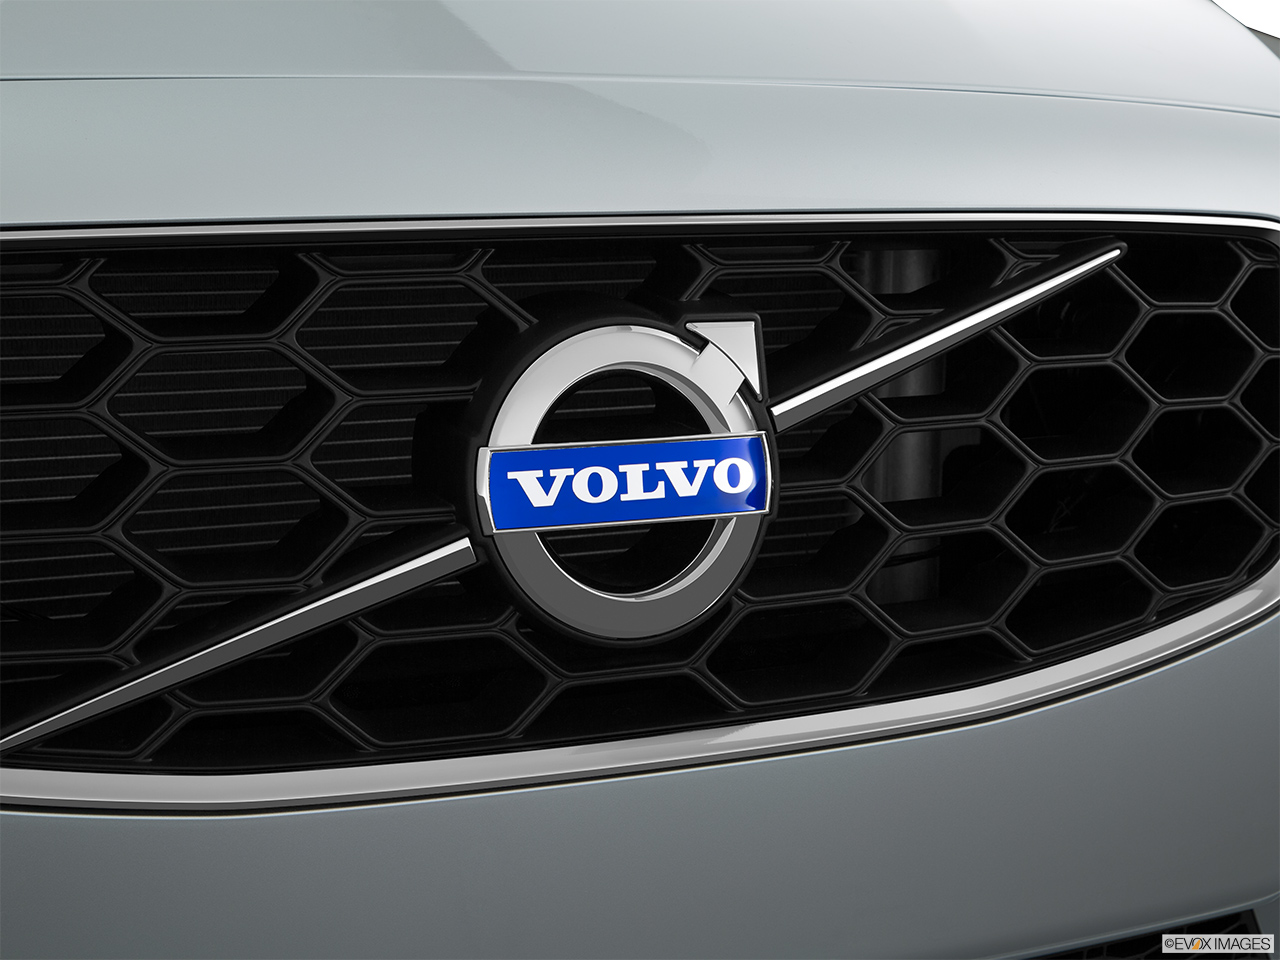 2016 Volvo XC70 T5 AWD Premier Rear manufacture badge/emblem 